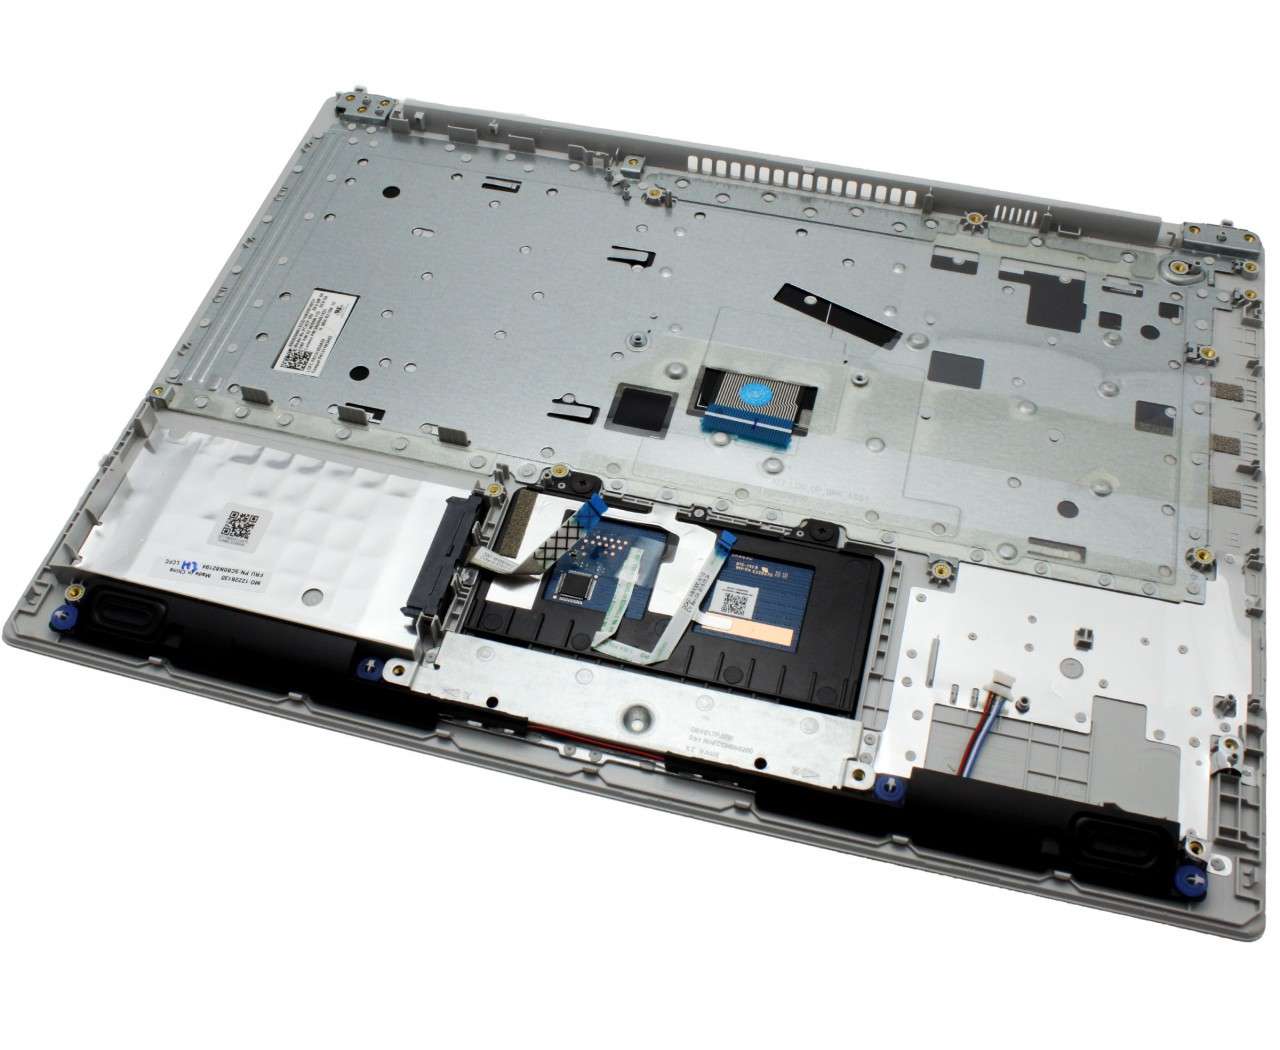 Tastatura Lenovo IdeaPad 320-14IKB Neagra cu Palmrest gri si Touchpad